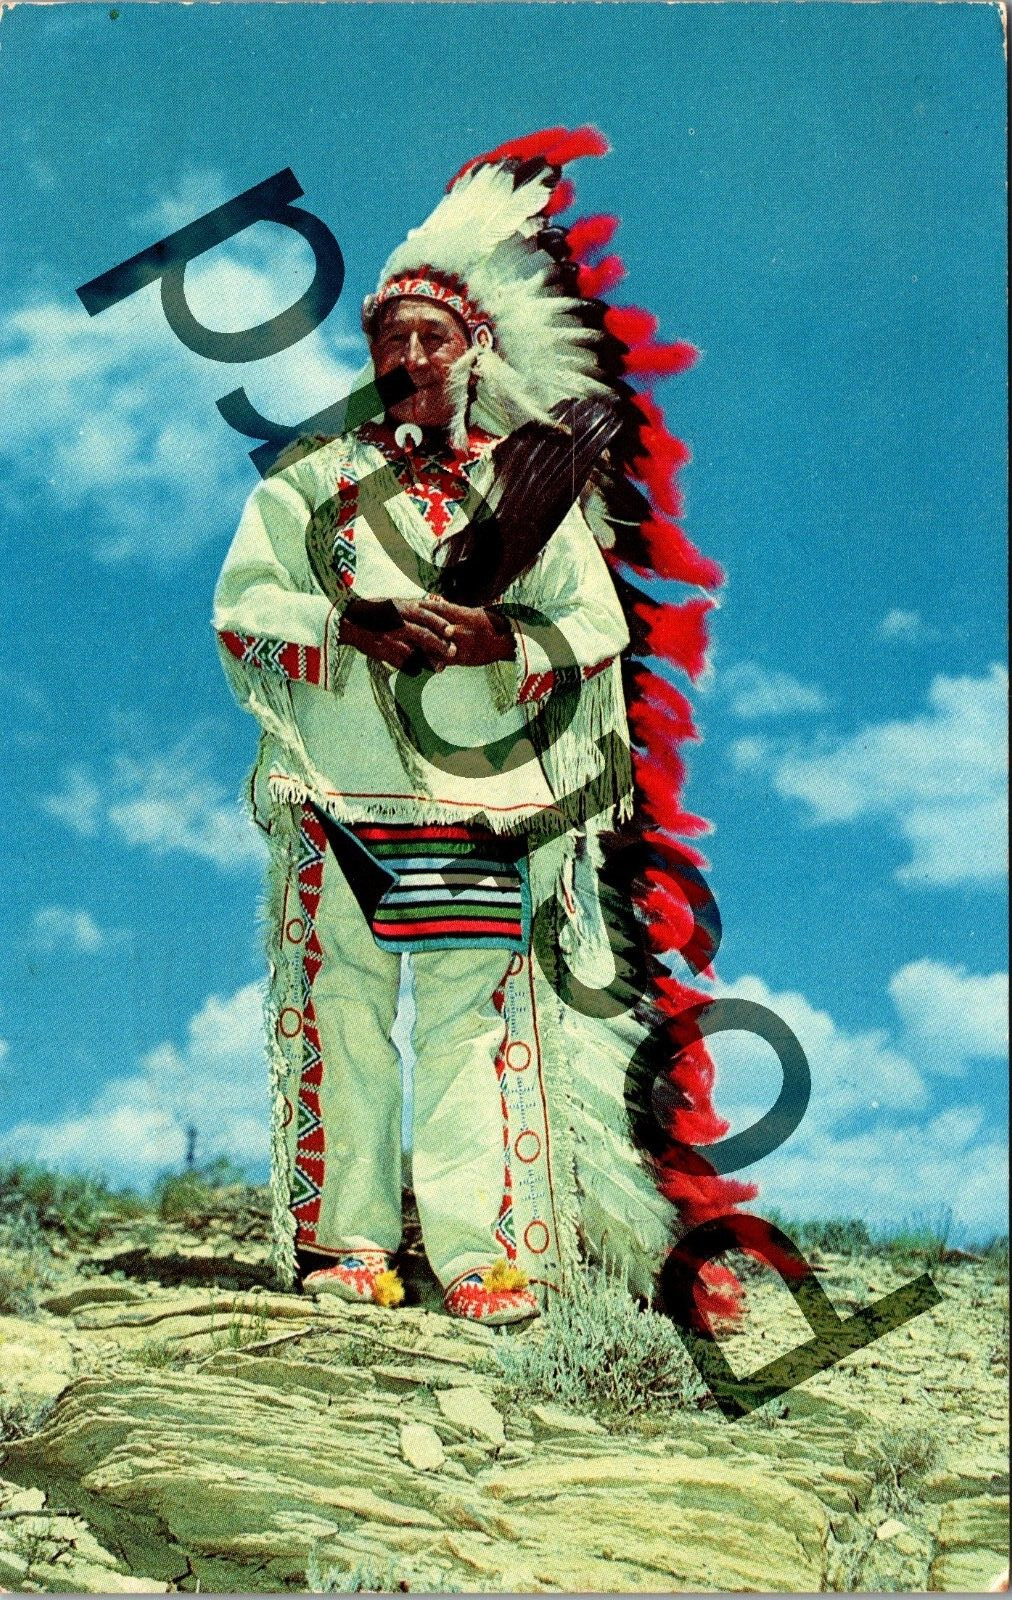 1958 GALLUP NM Chief Ironcloud Souix tribe at Indian Ceremonials  postcard jj081